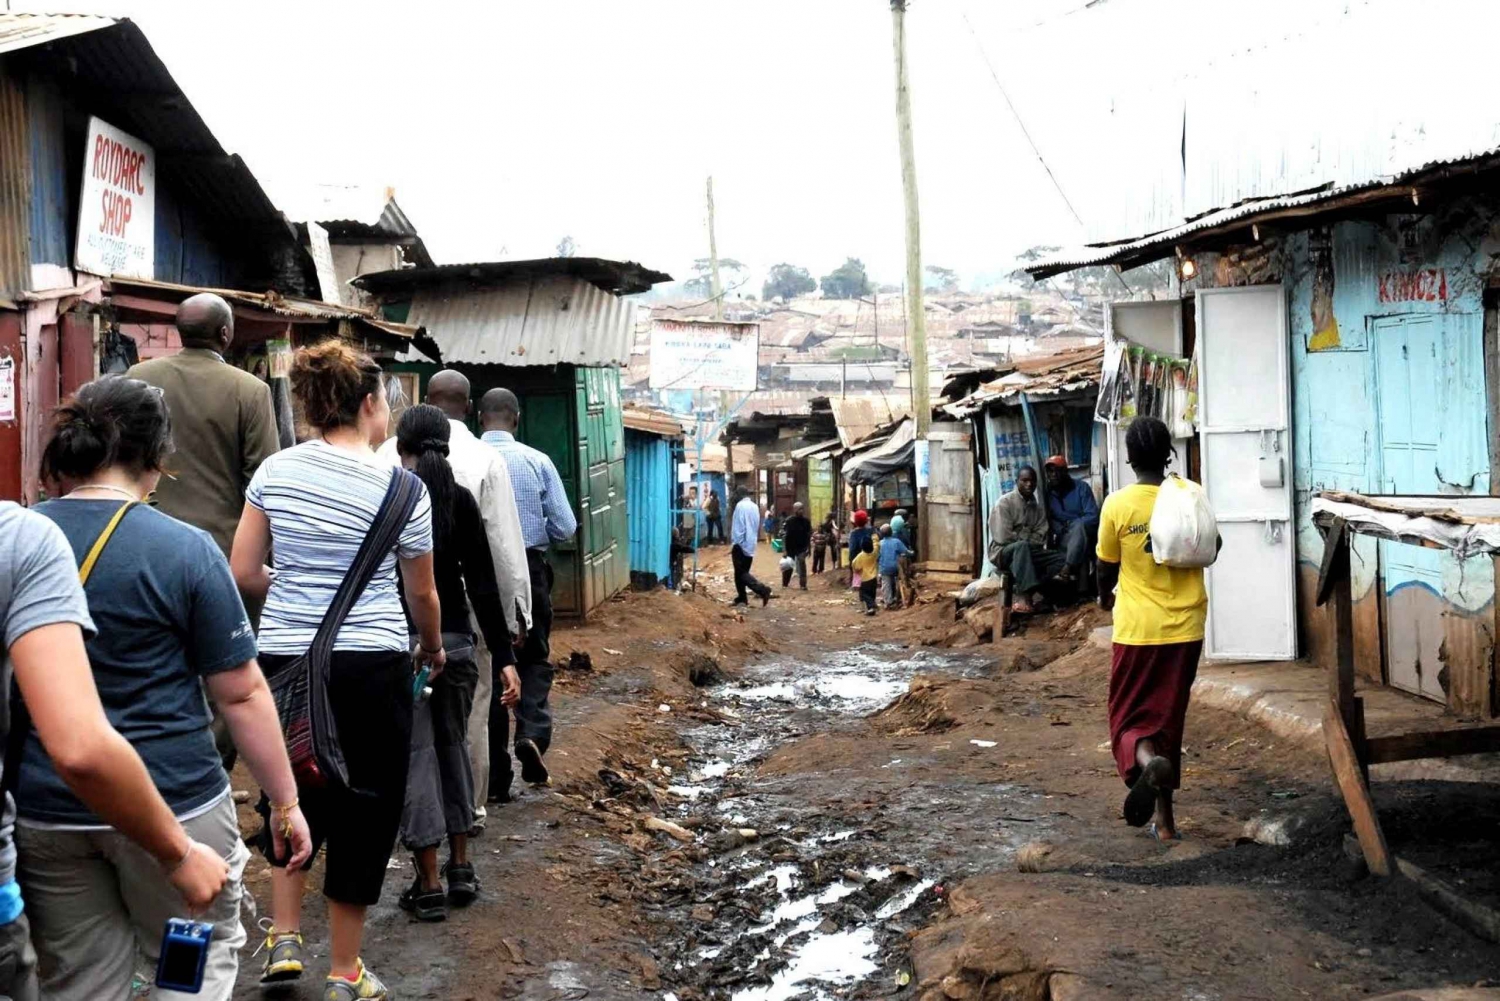 Visite à pied du bidonville de Kibera